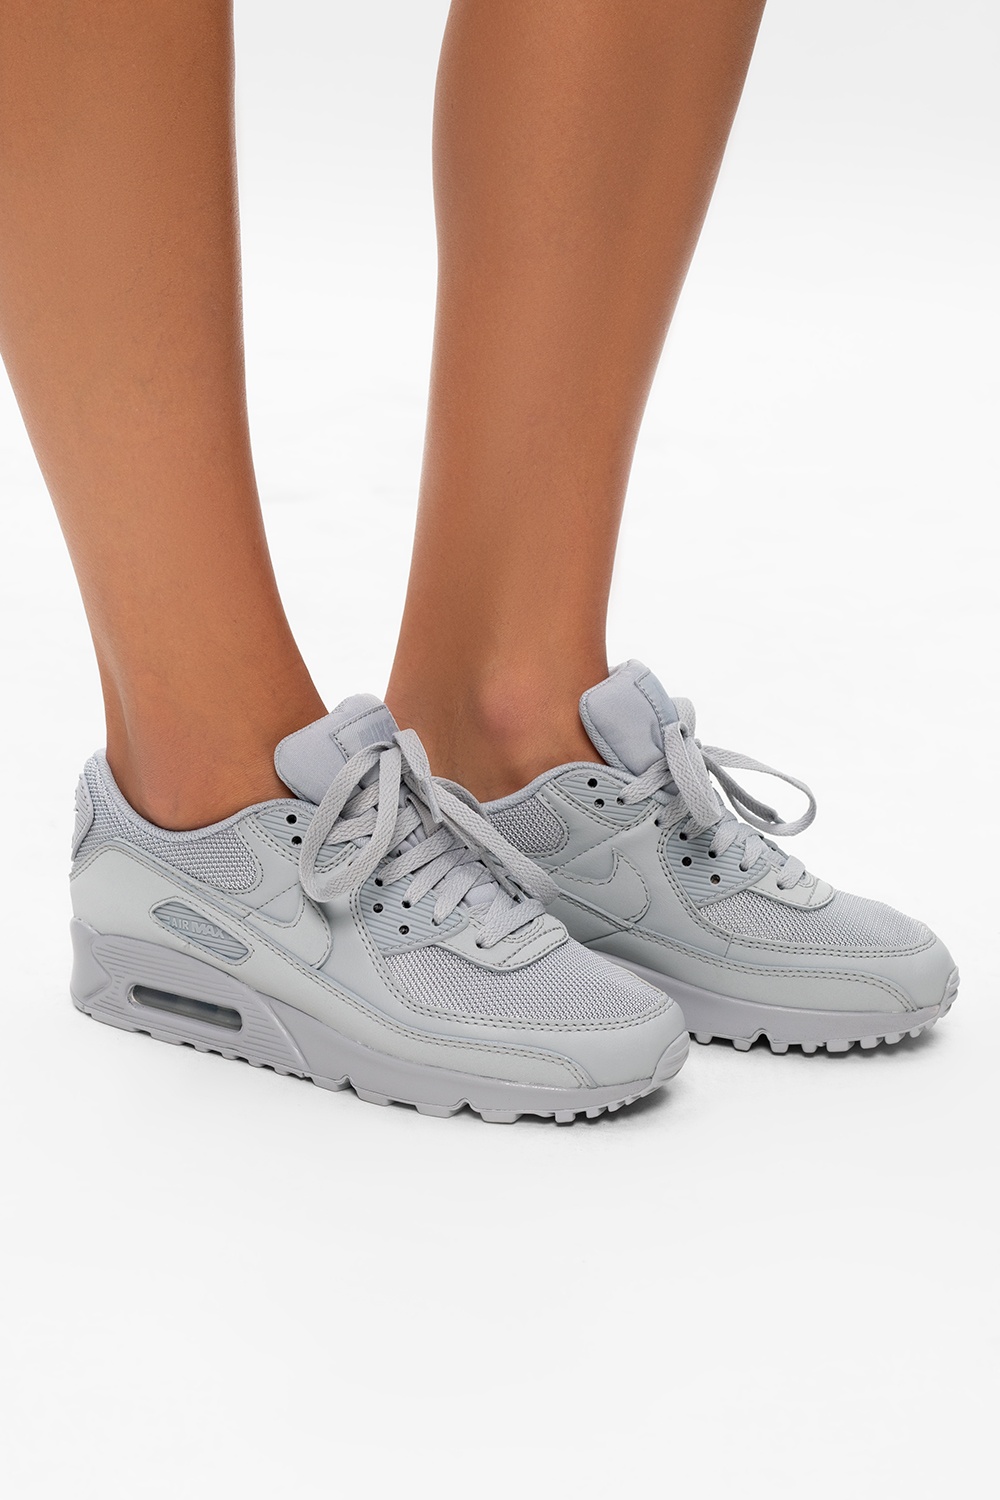 Nike 'Air Max 90' sneakers | Women's Shoes | Vitkac